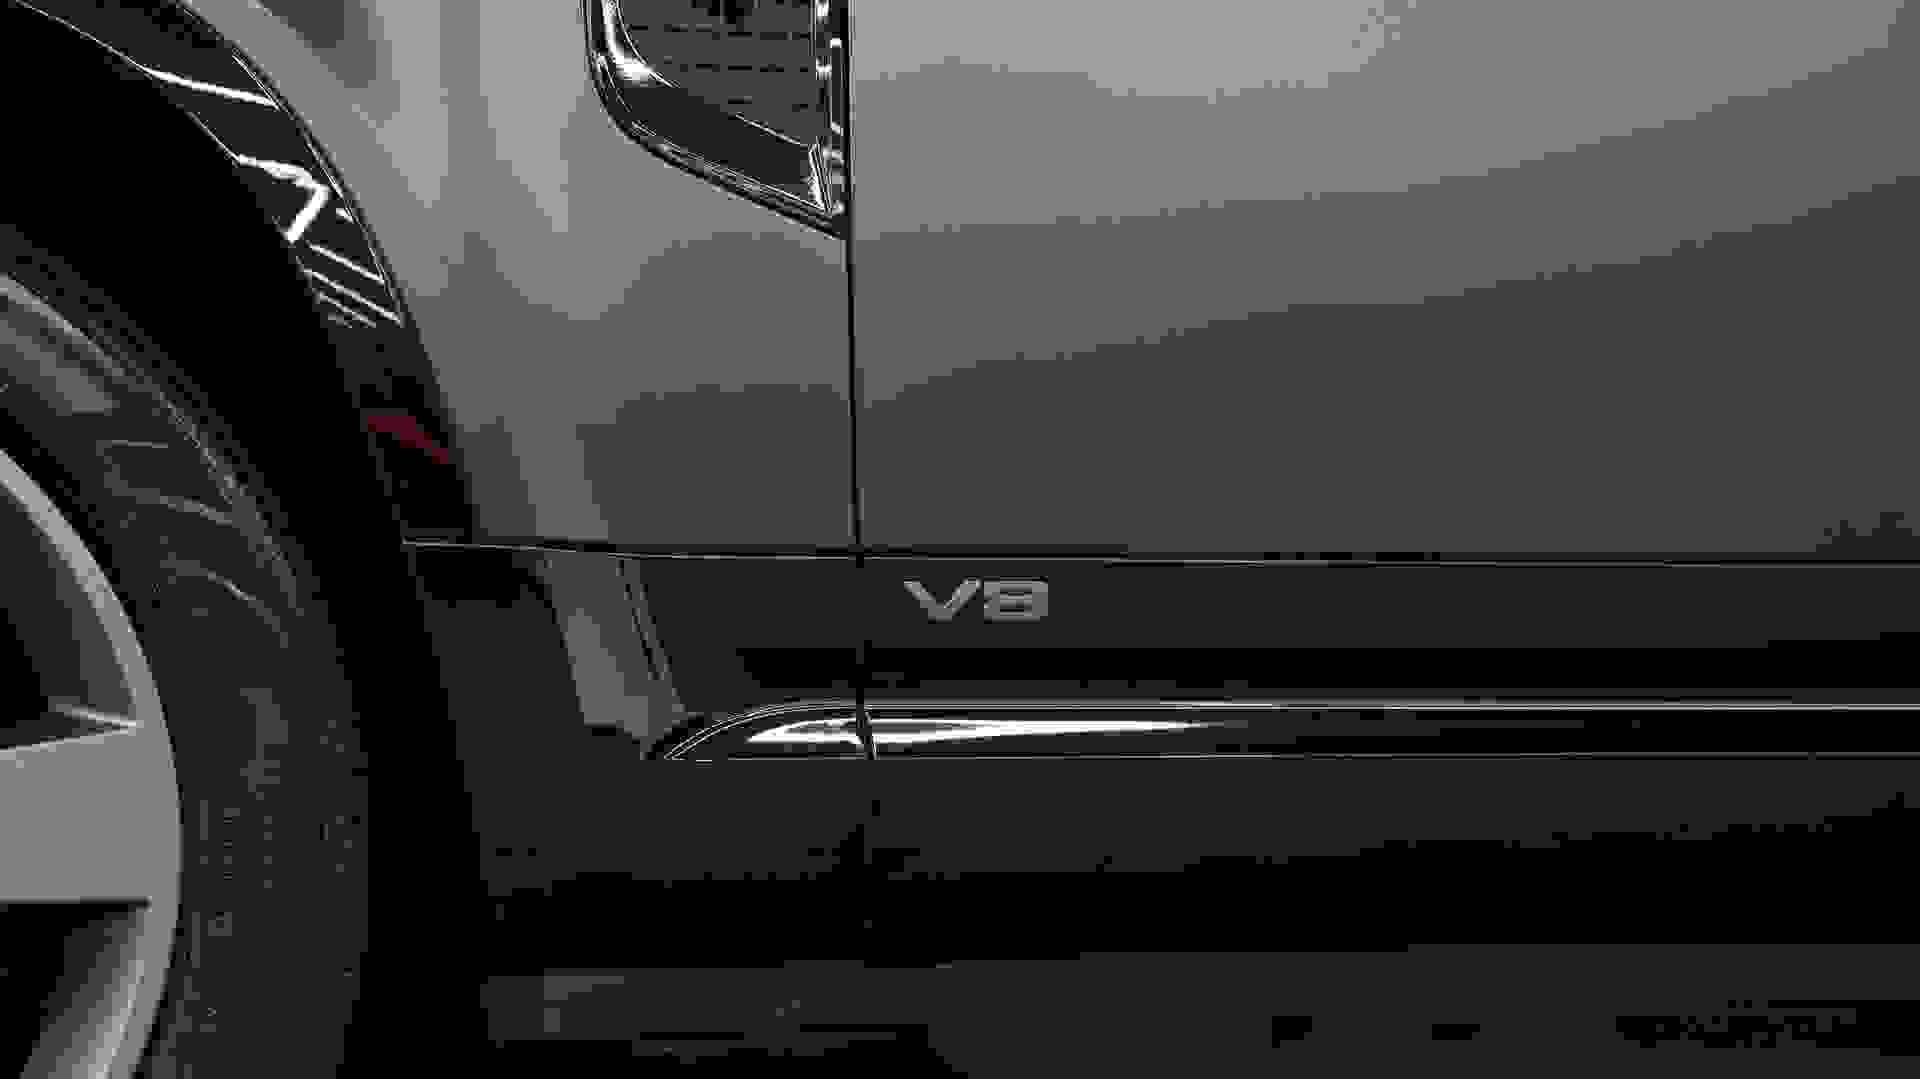 Land Rover DEFENDER V8 CARPATHIAN EDITION Photo cdf71045-f465-41b3-95cd-553f09b271cd.jpg